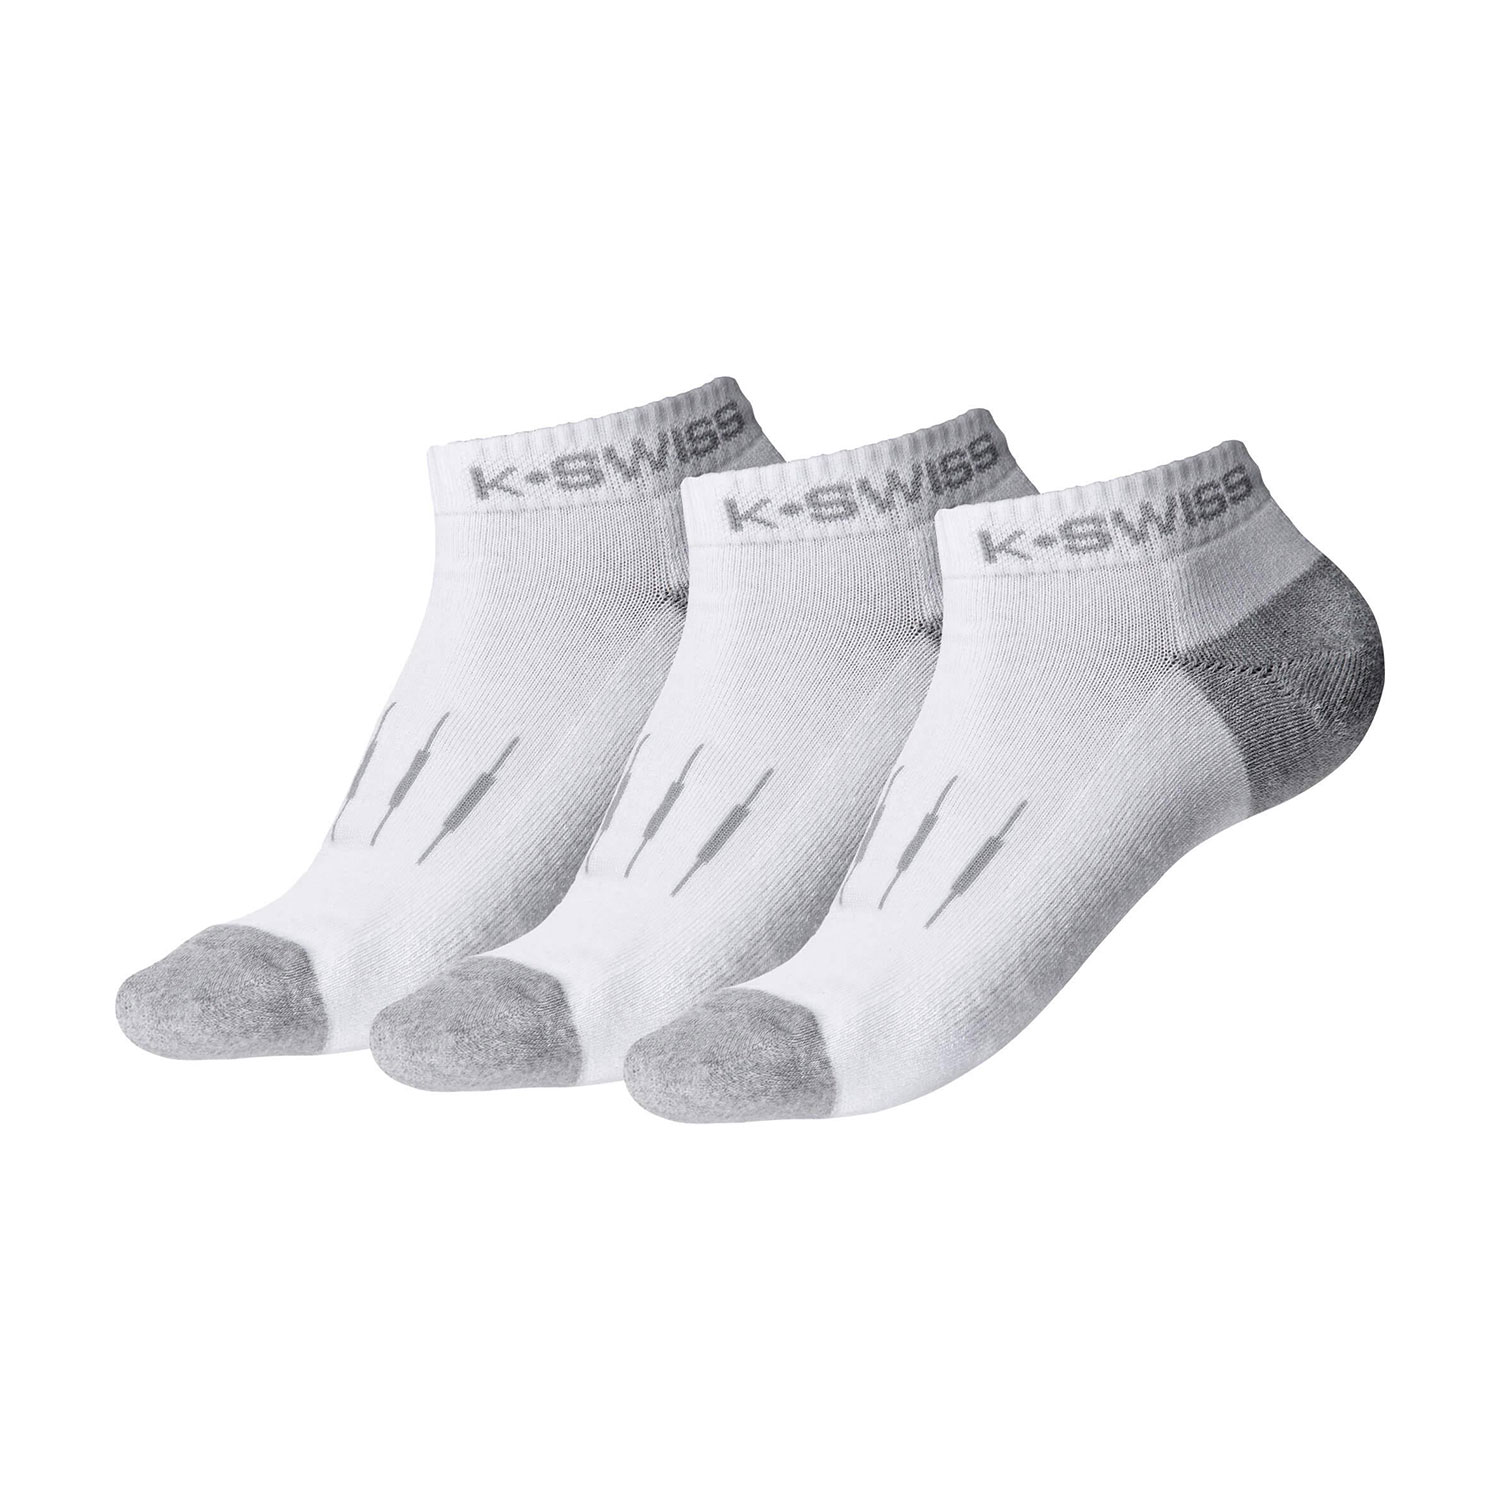 K-Swiss Court x 3 Socks Woman - White/Light Grey